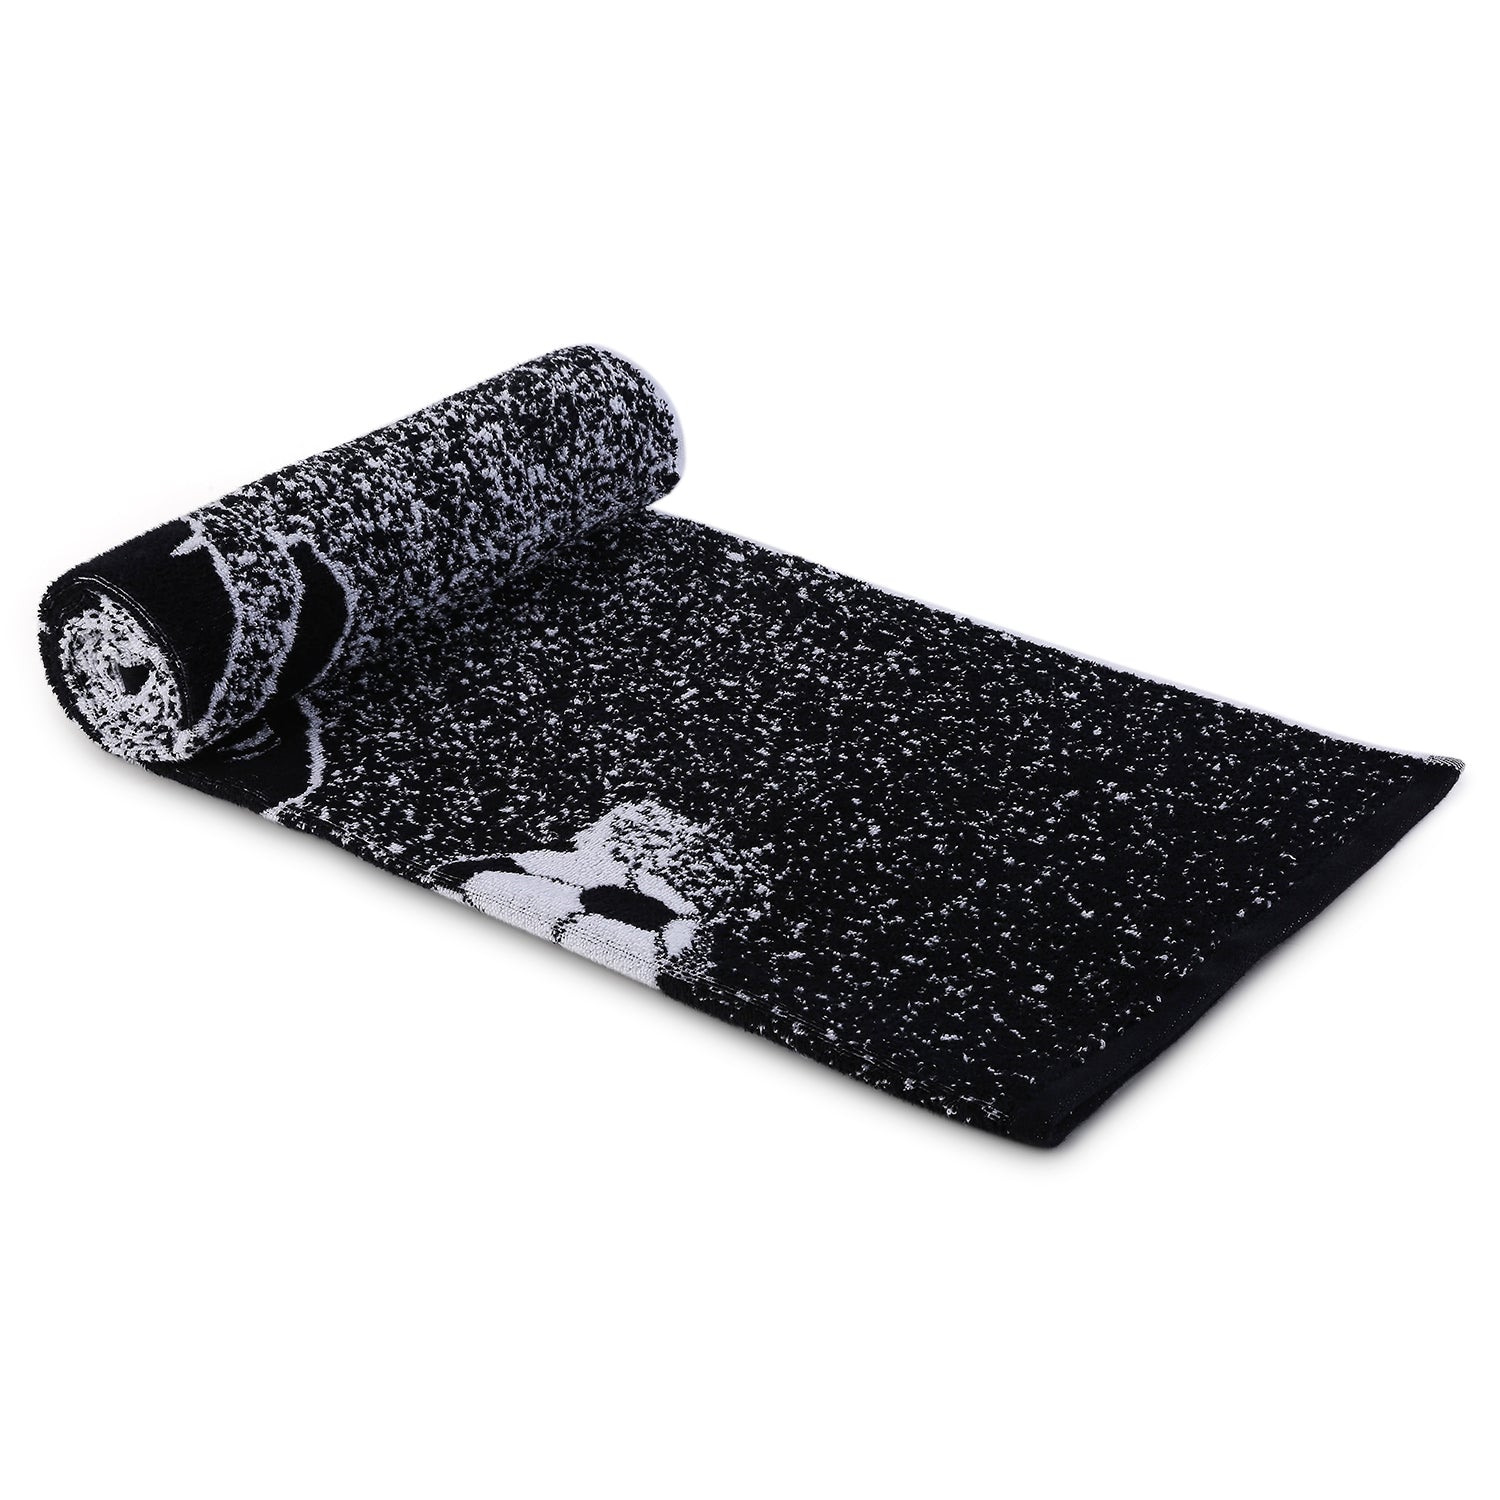 Black & White Football Towel